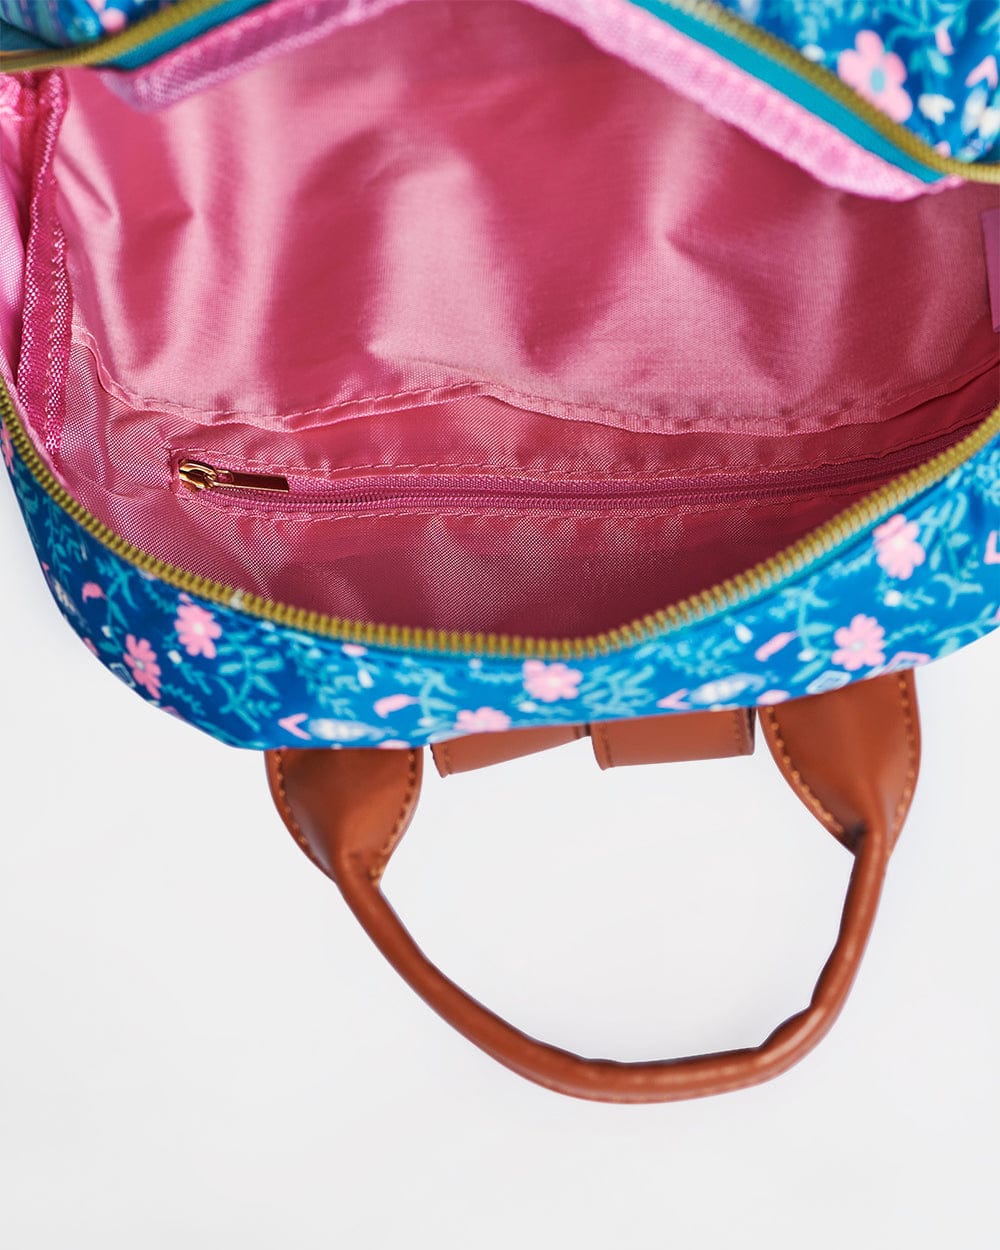 Chumbak Vacay Floral Backpack-Teal